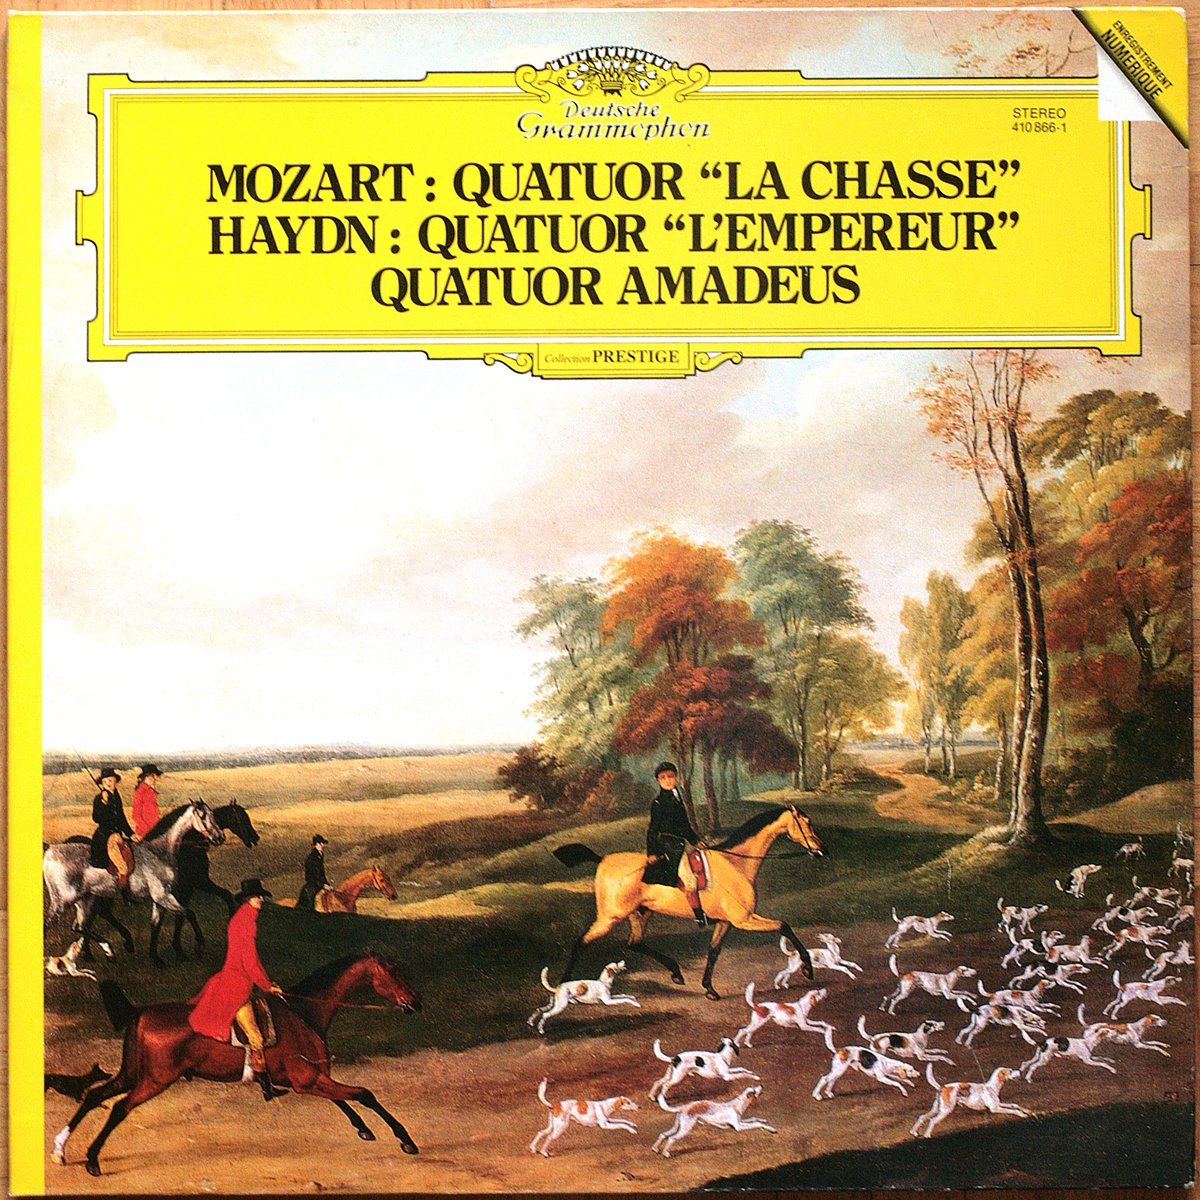 DGG 410 866 Mozart Haydn Quatuors Chasse Empereur Amadeus DGG Digital Aufnahme